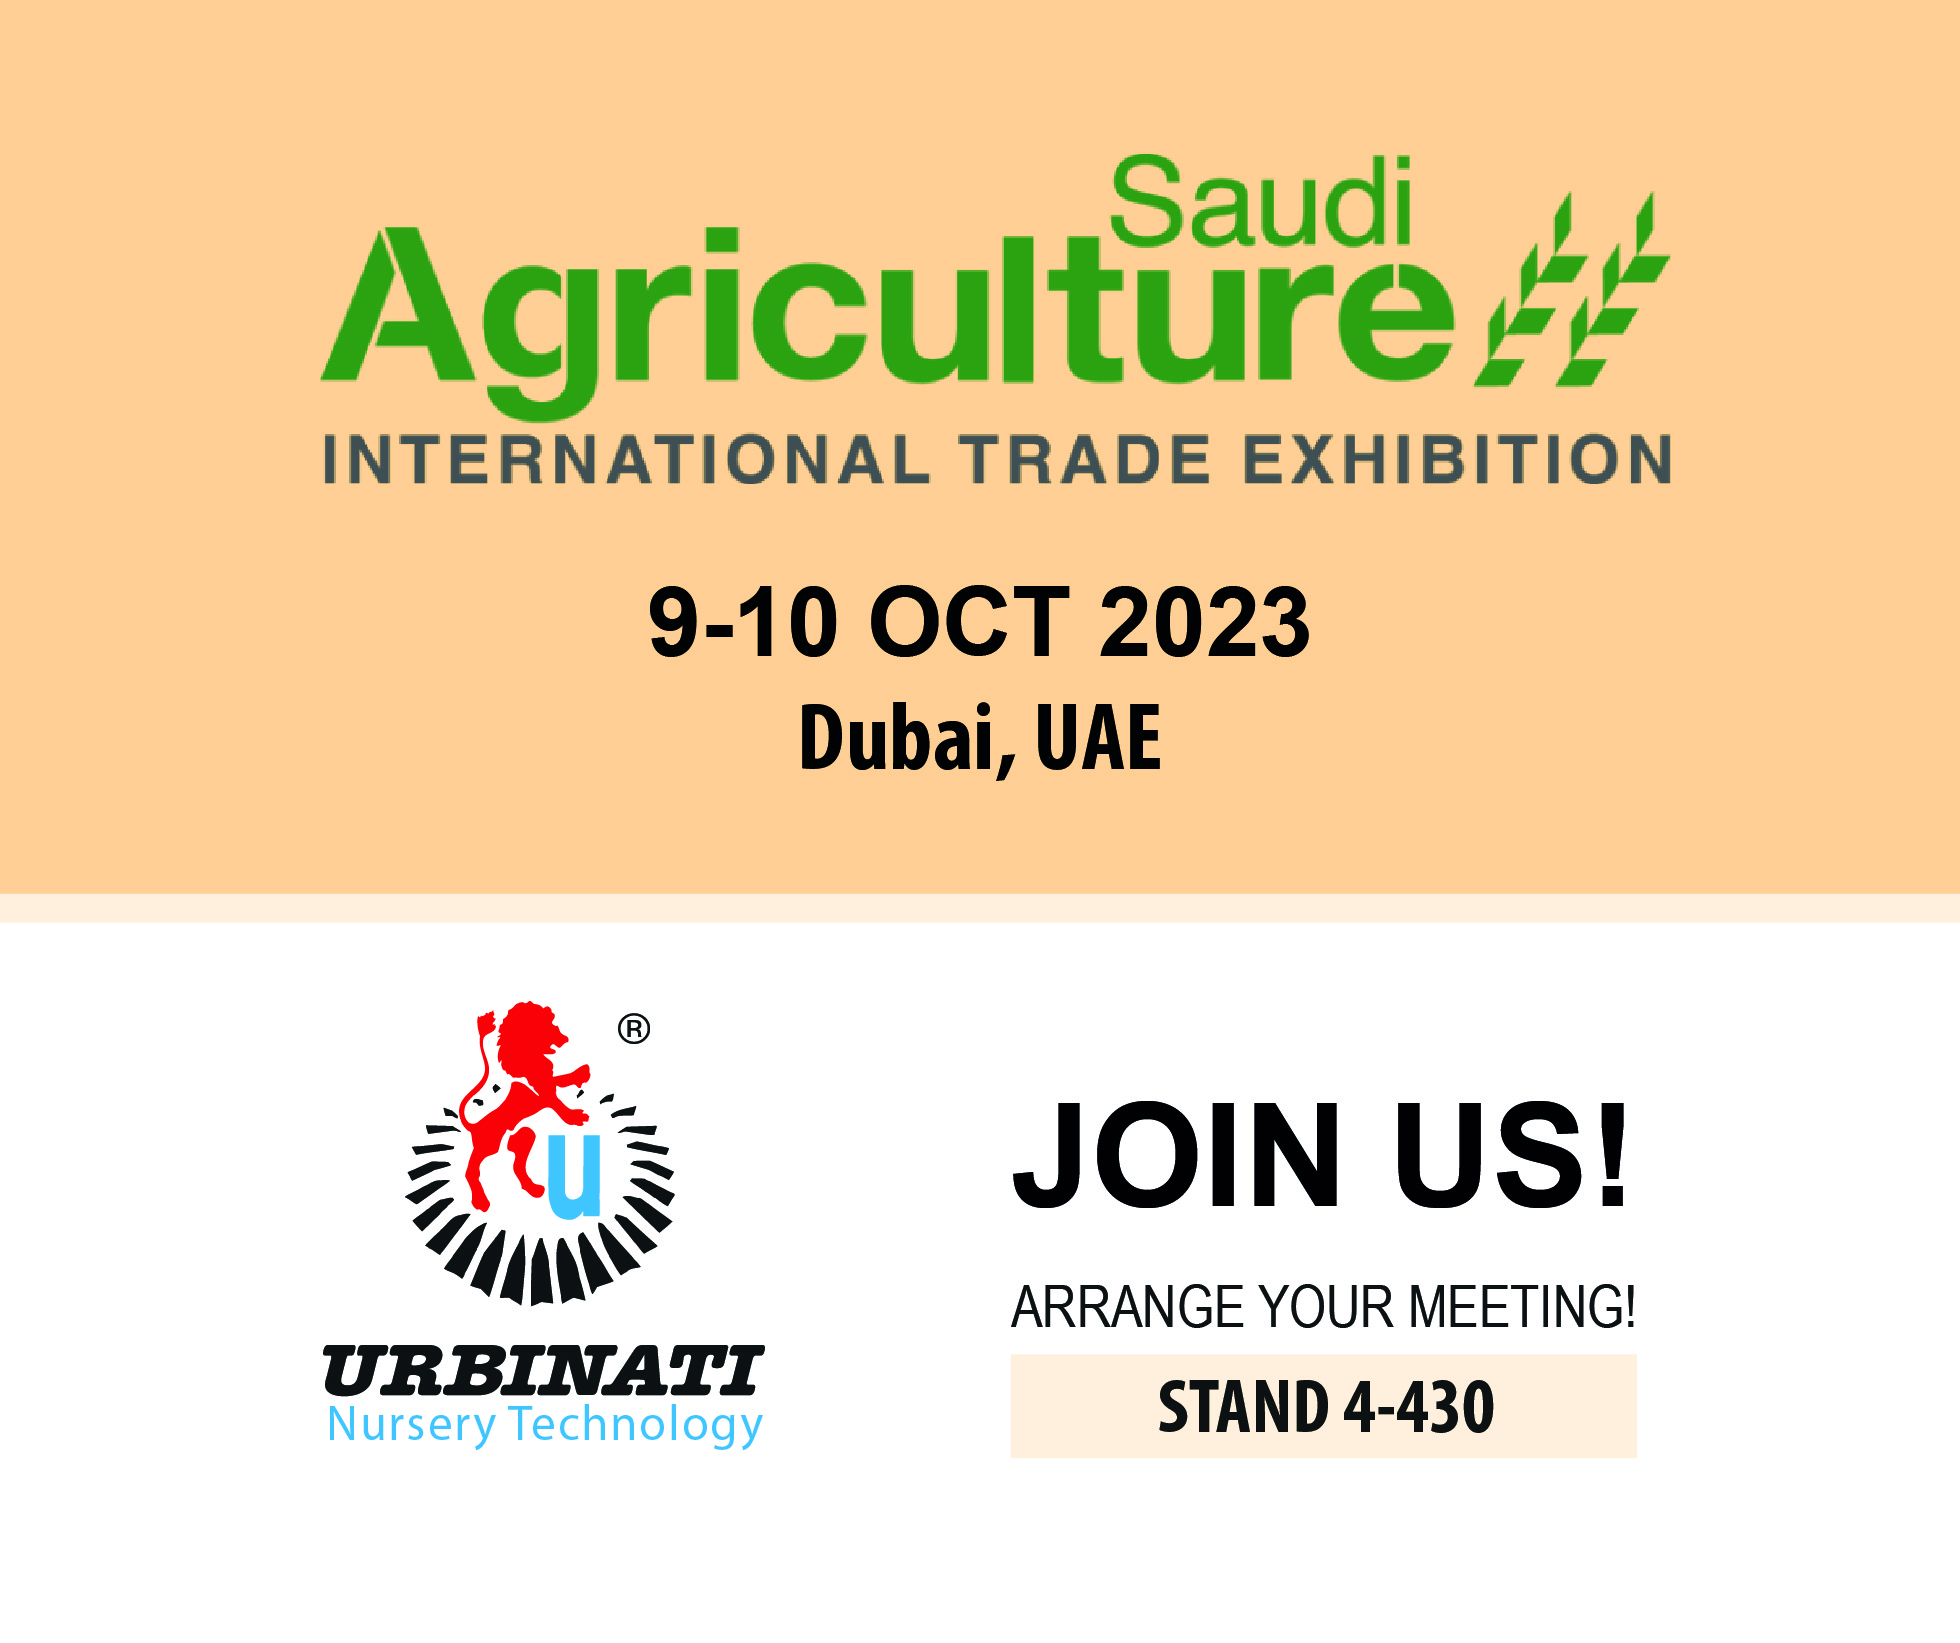 Invito Evento Saudi Agriculture Arabia Saudita Urbinati stand 4-430